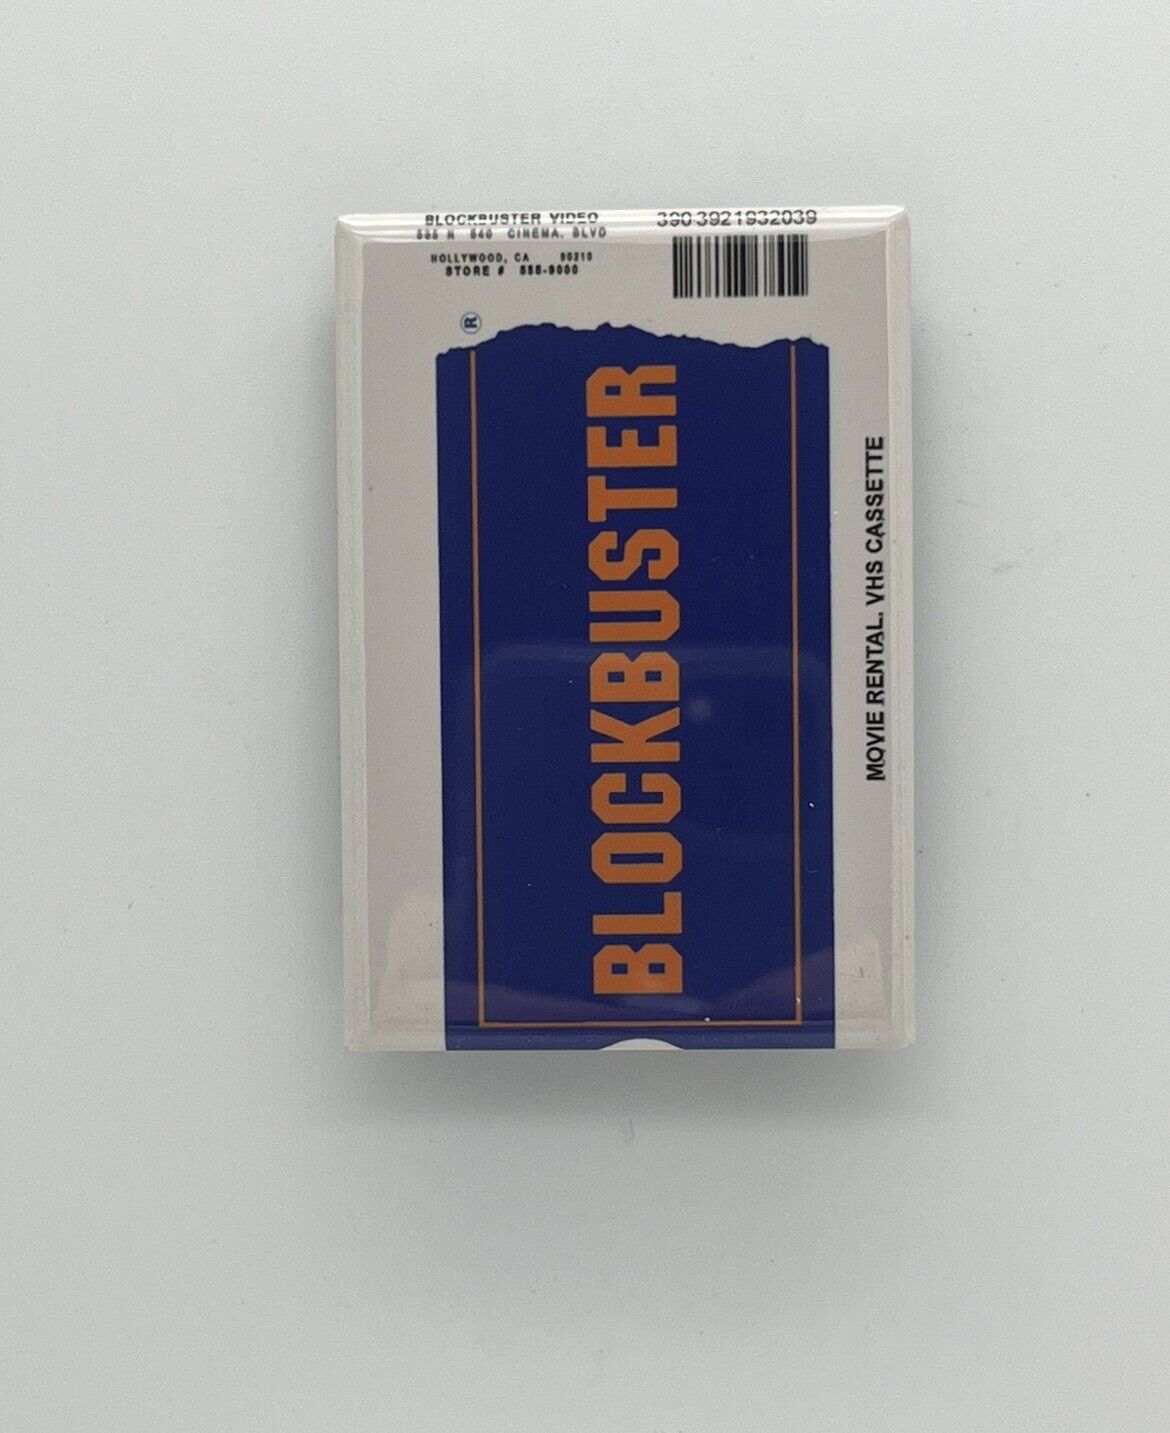 Blockbuster Vhs Rental Case Promotional Fridge / Locker Magnet